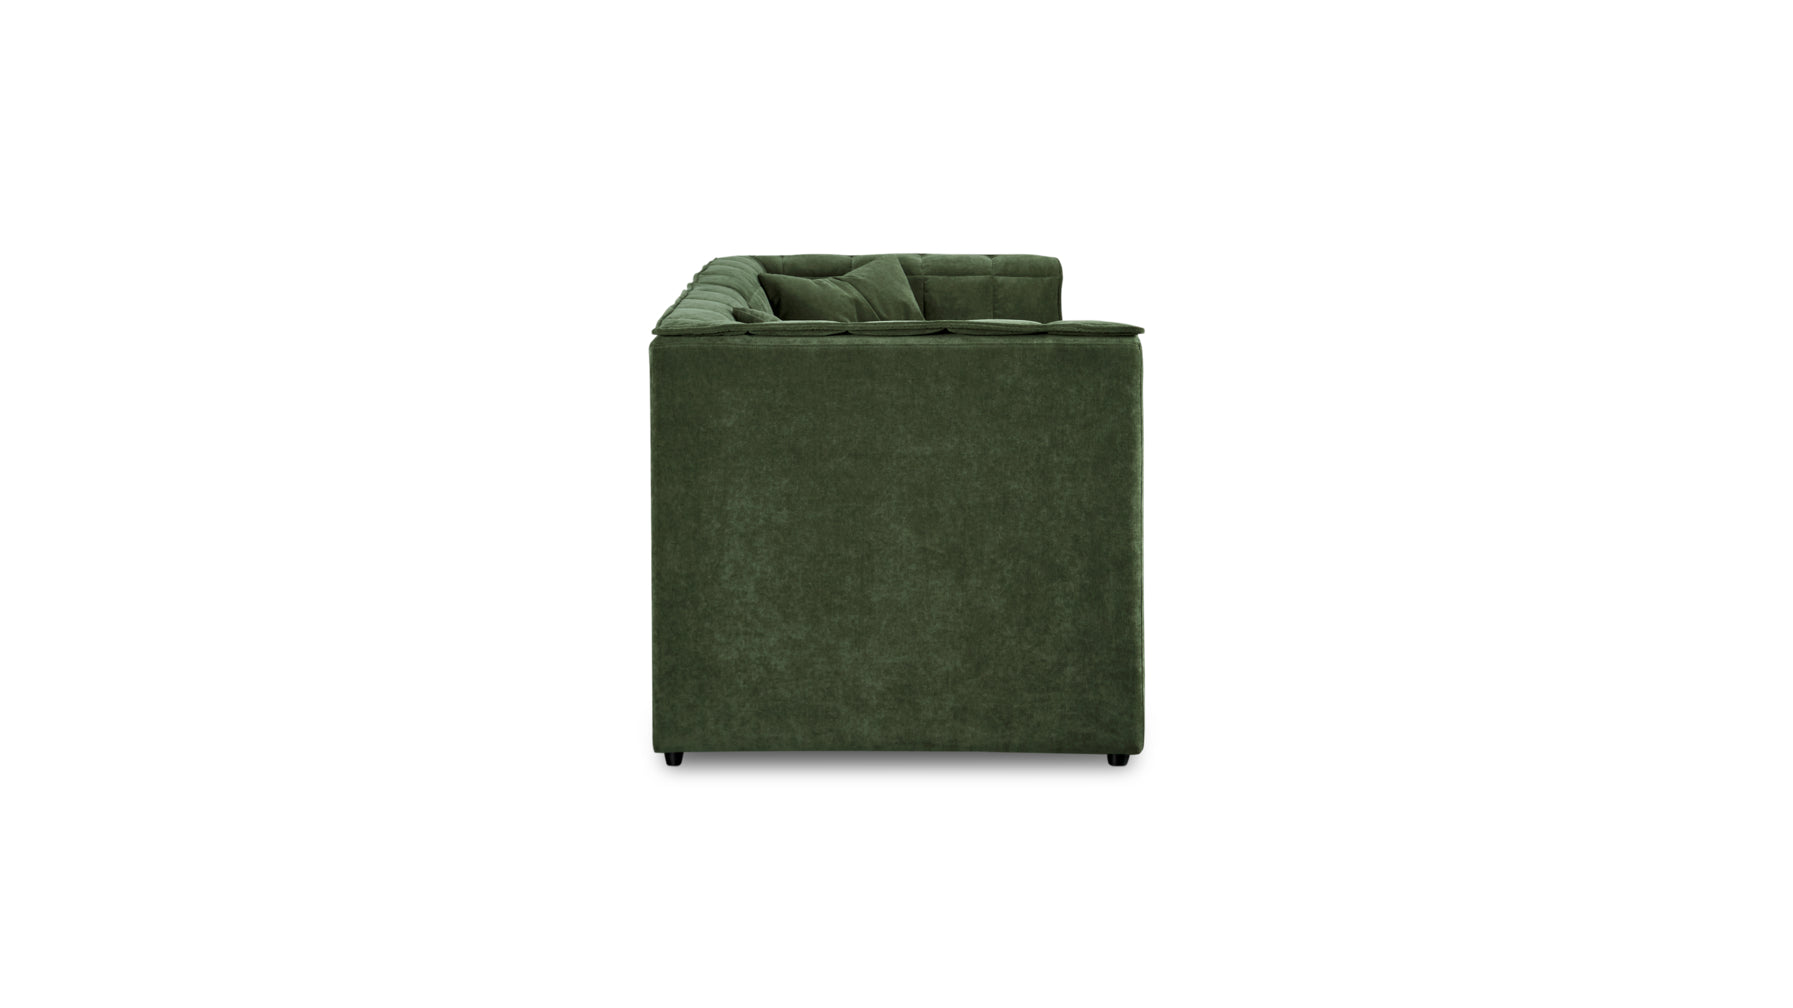 Quilt 2-Piece Modular Sofa, Moss - Image 3